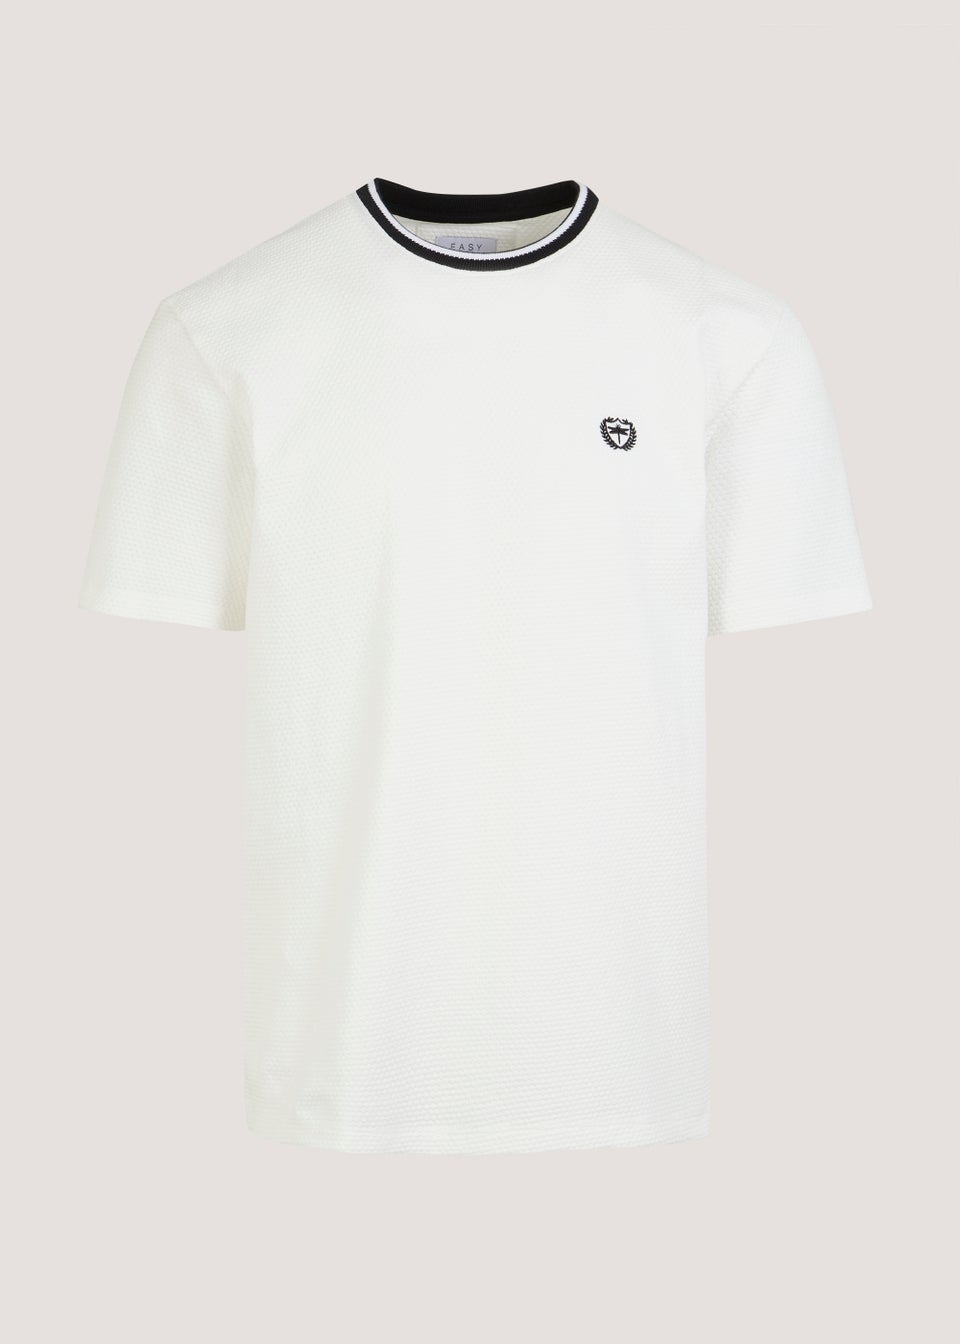 White Monochrome T-Shirt - Matalan